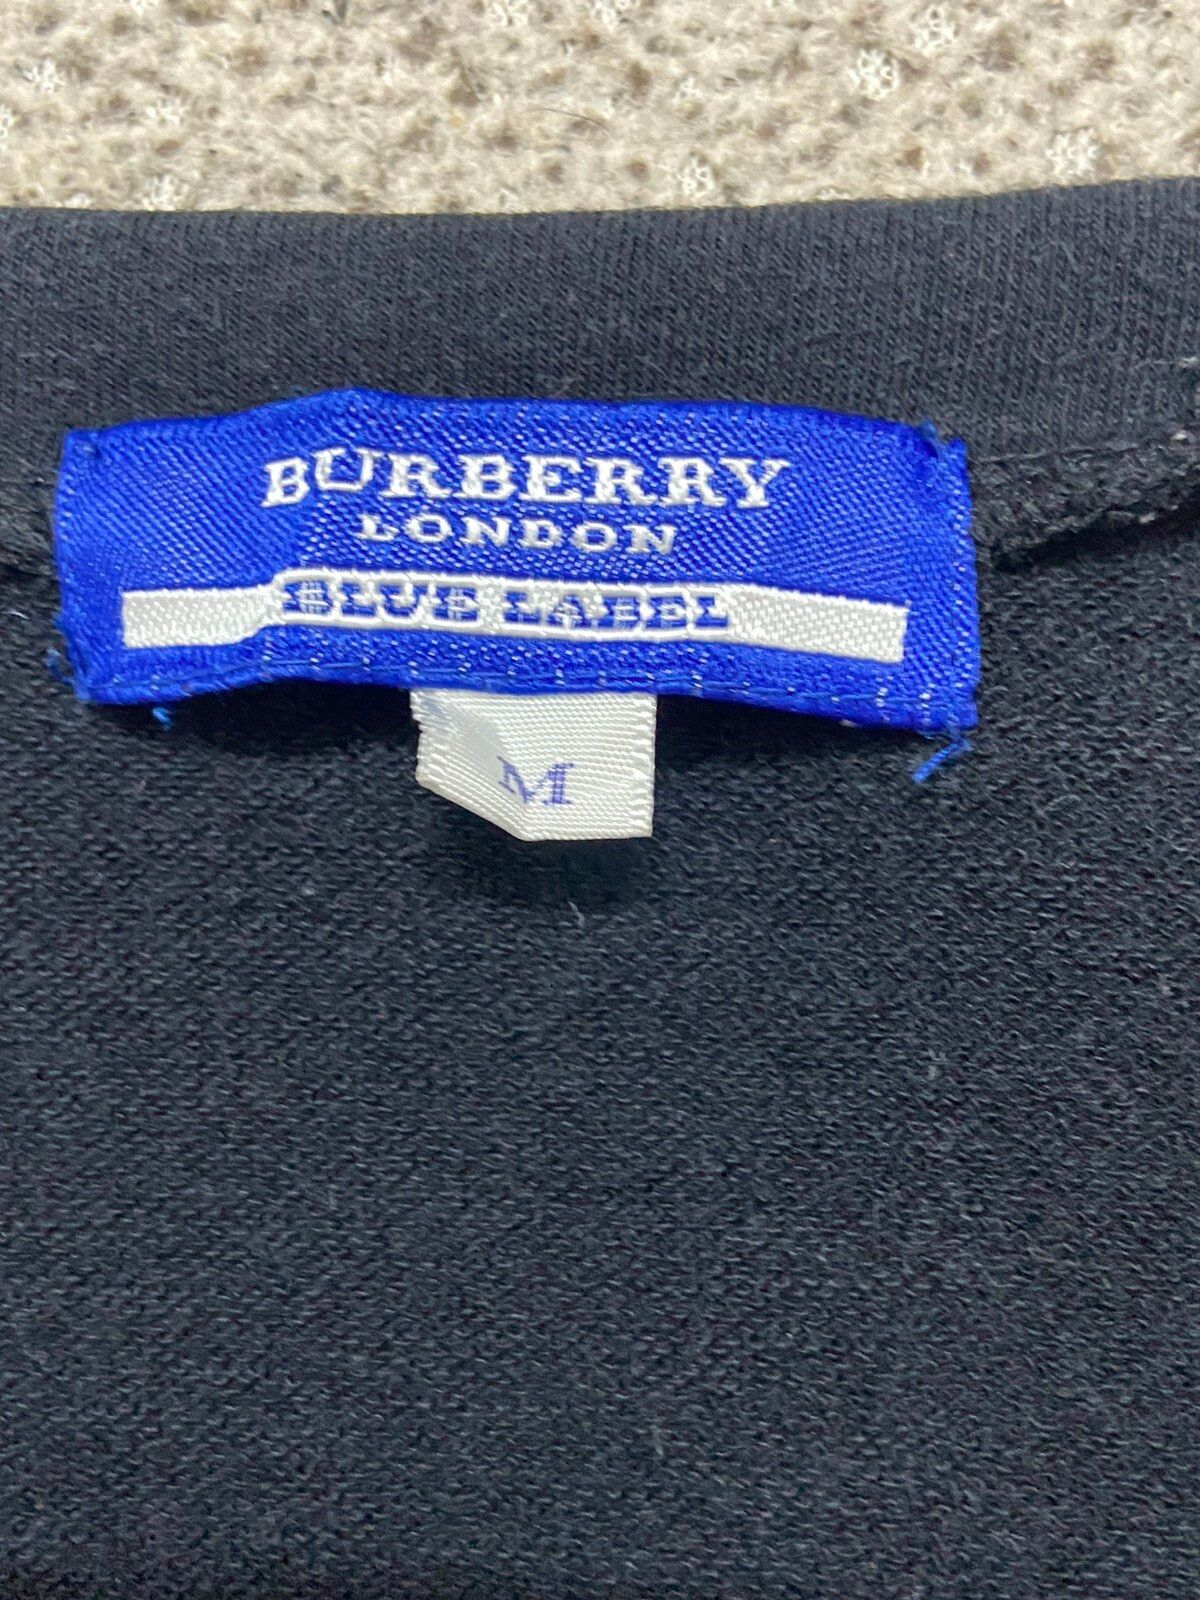 Burberry Blue Label Vneck Tee - 4